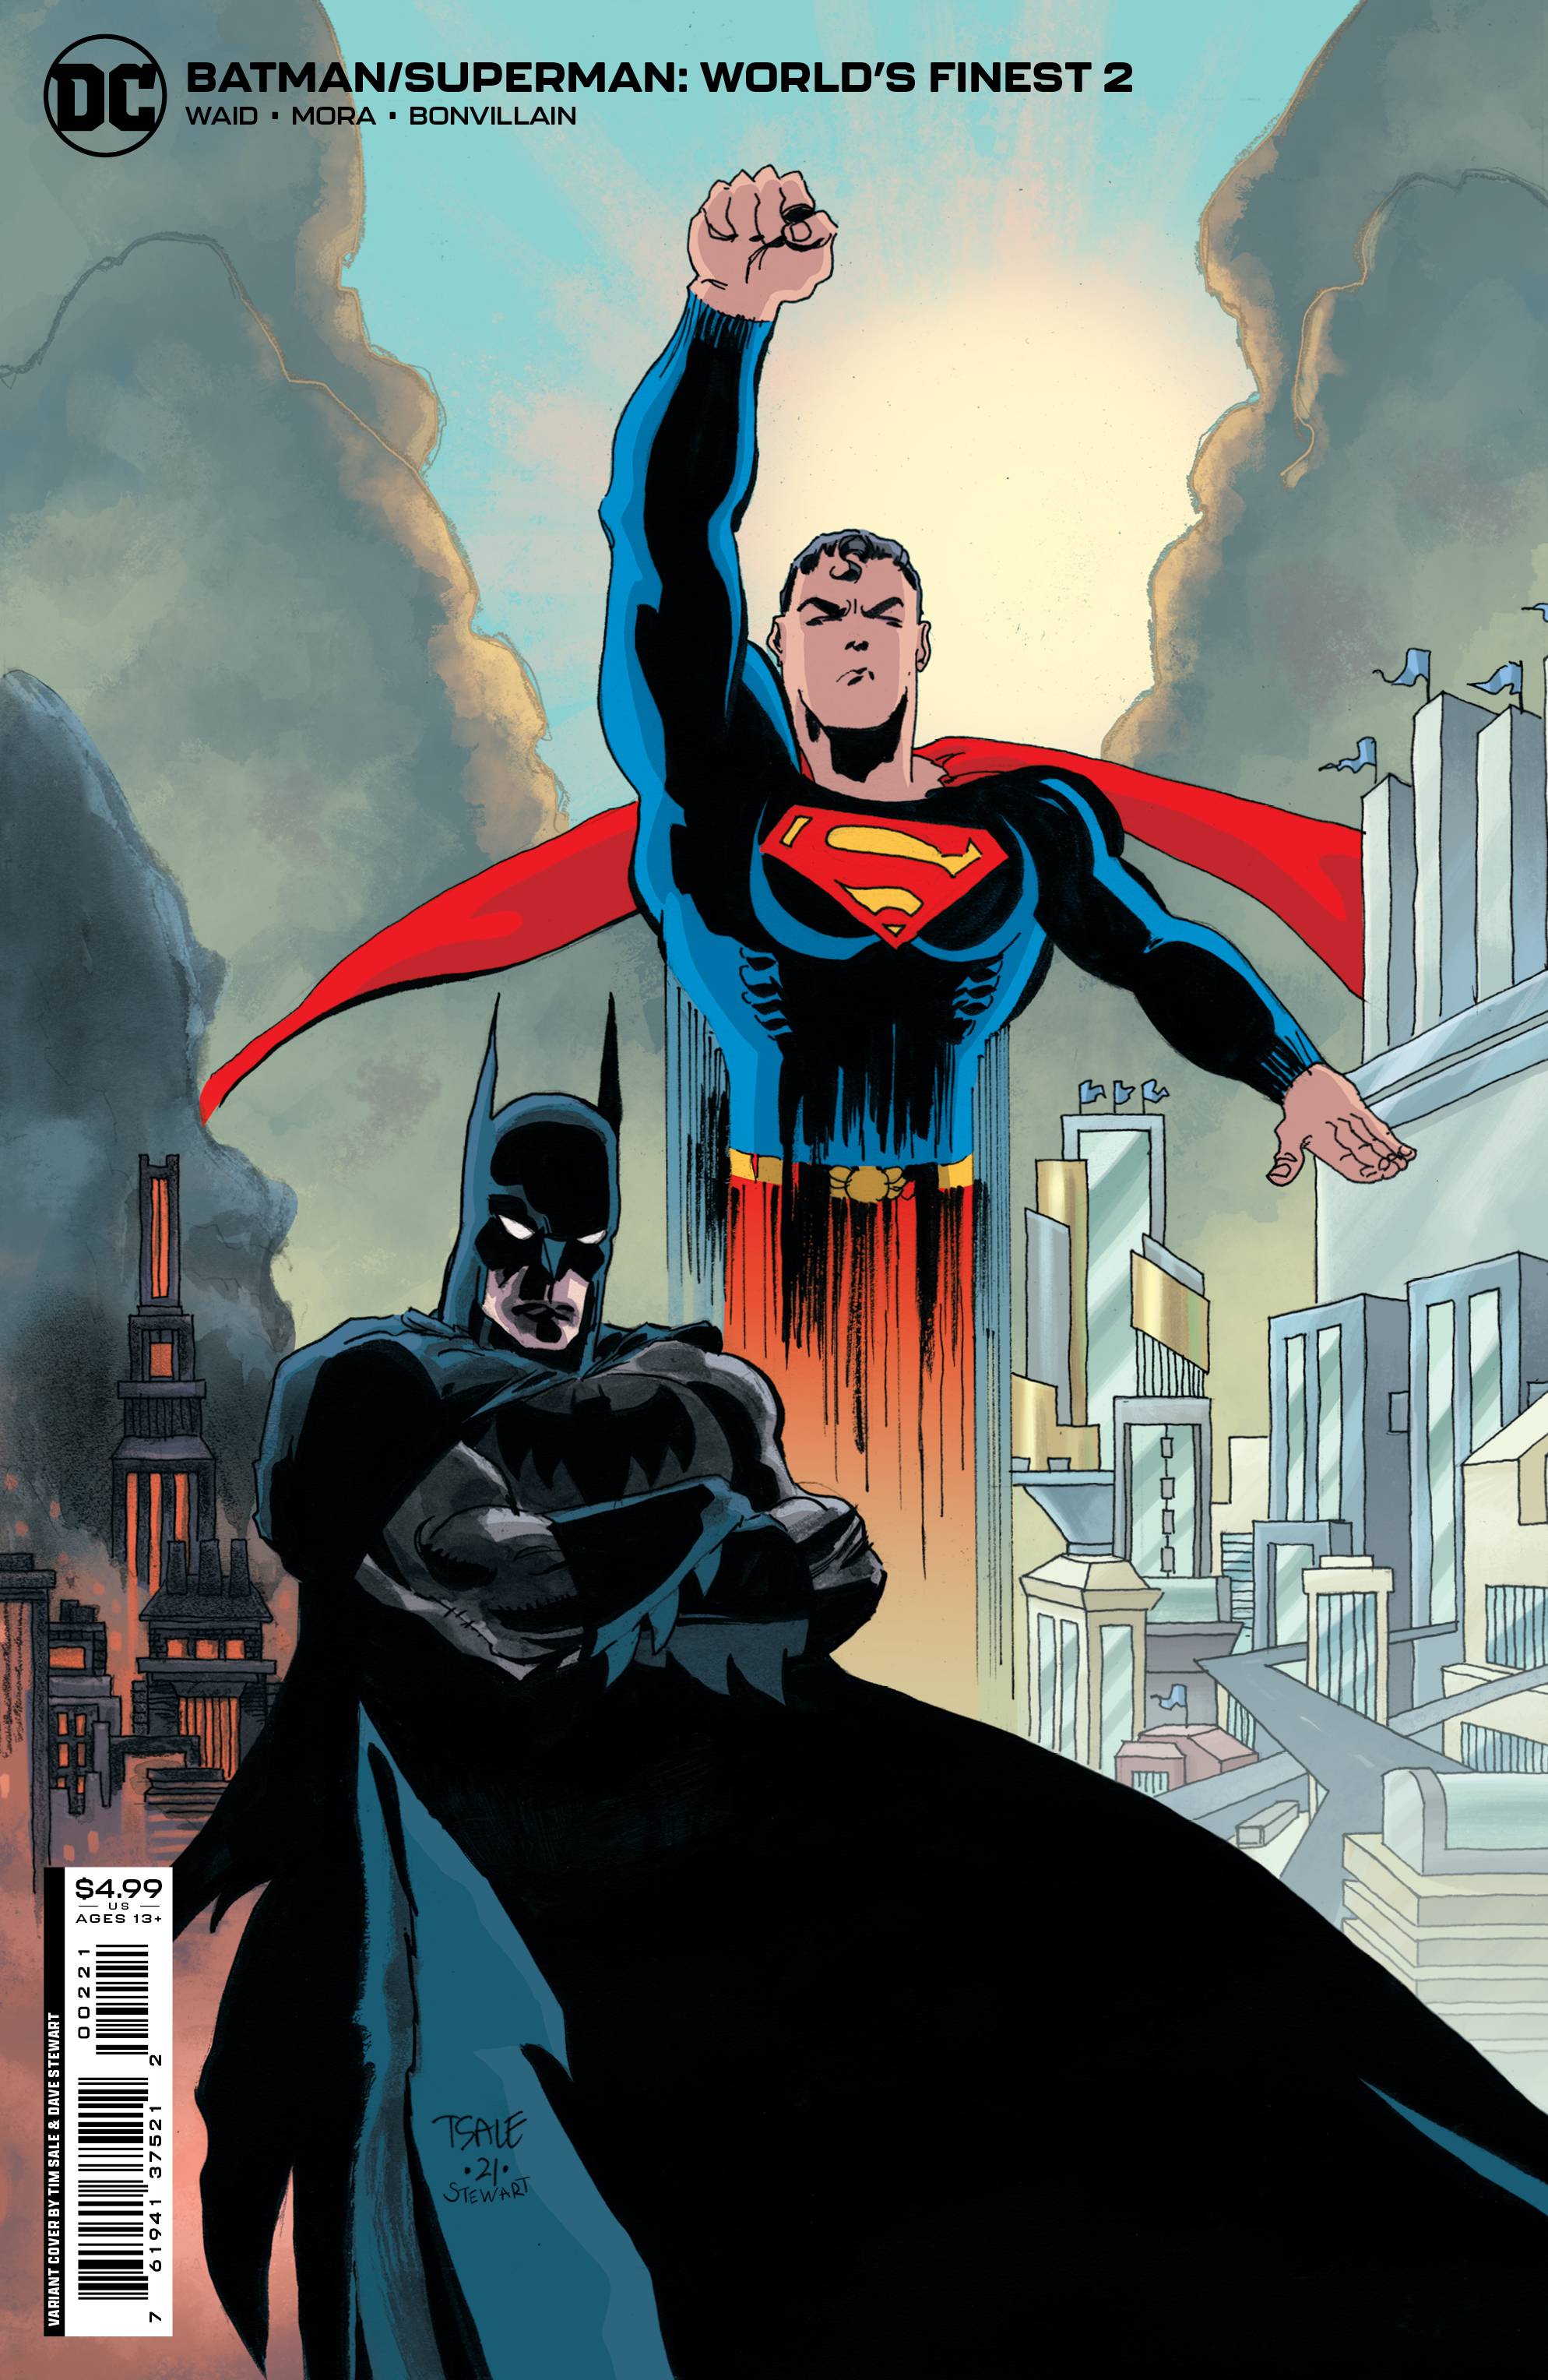 BATMAN SUPERMAN WORLDS FINEST #2 CVR B SALE CARD STOCK